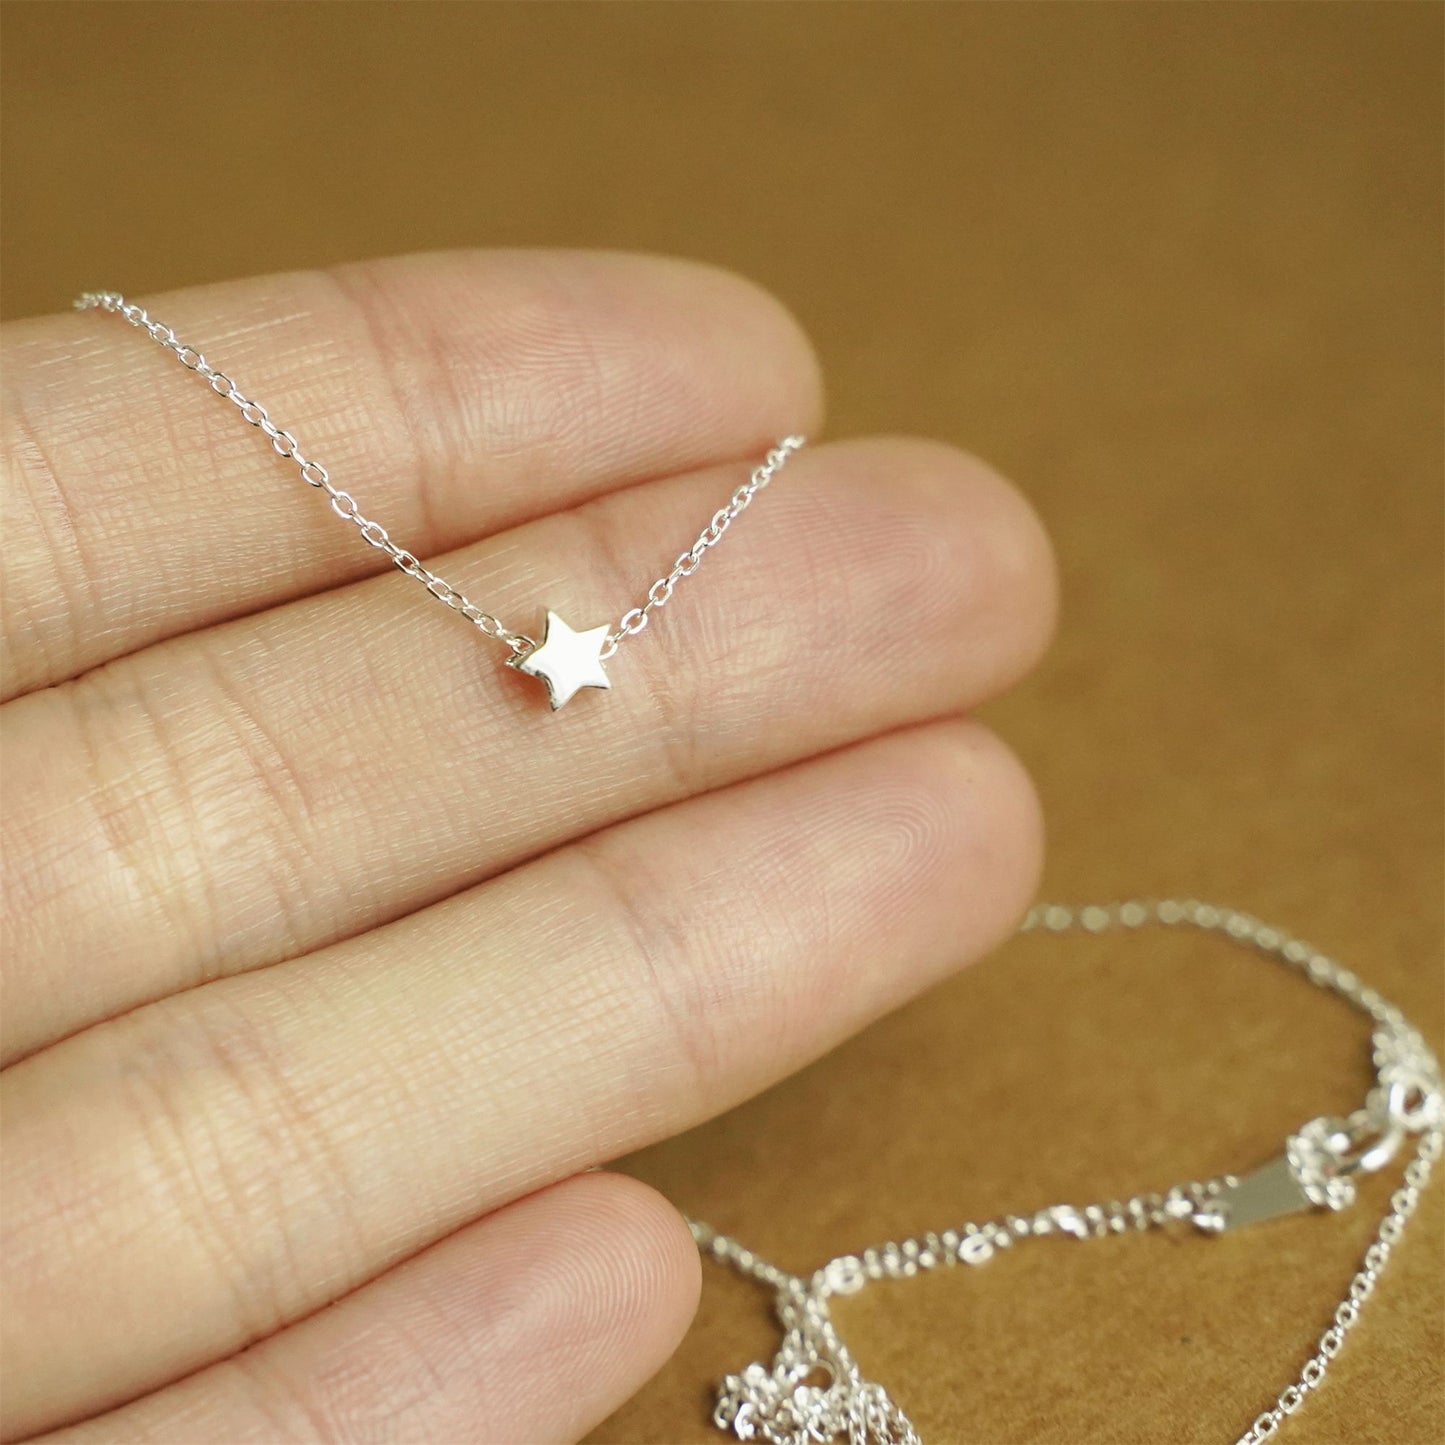 Sterling Silver Belcher Chain Necklace with Star Pendant - sugarkittenlondon